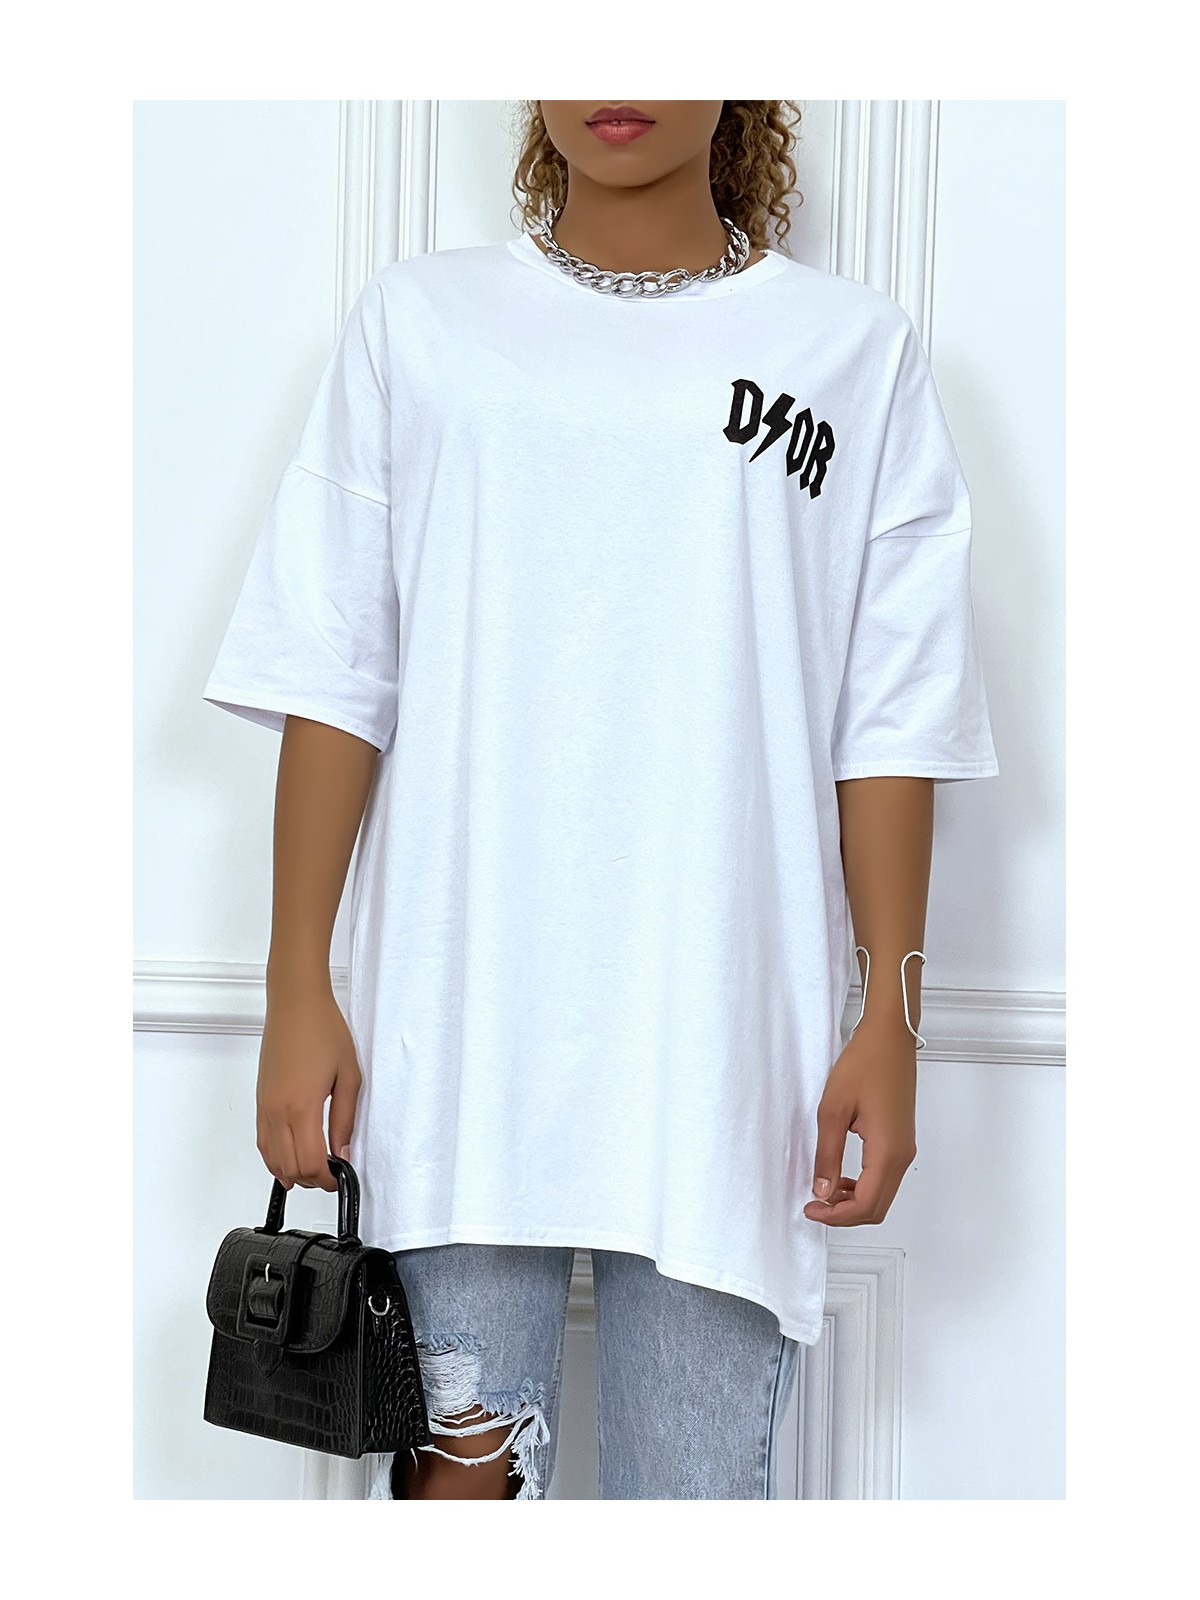 Tee-shirt oversize blanc tendance, écriture "D/or", manche mi-longue - 1